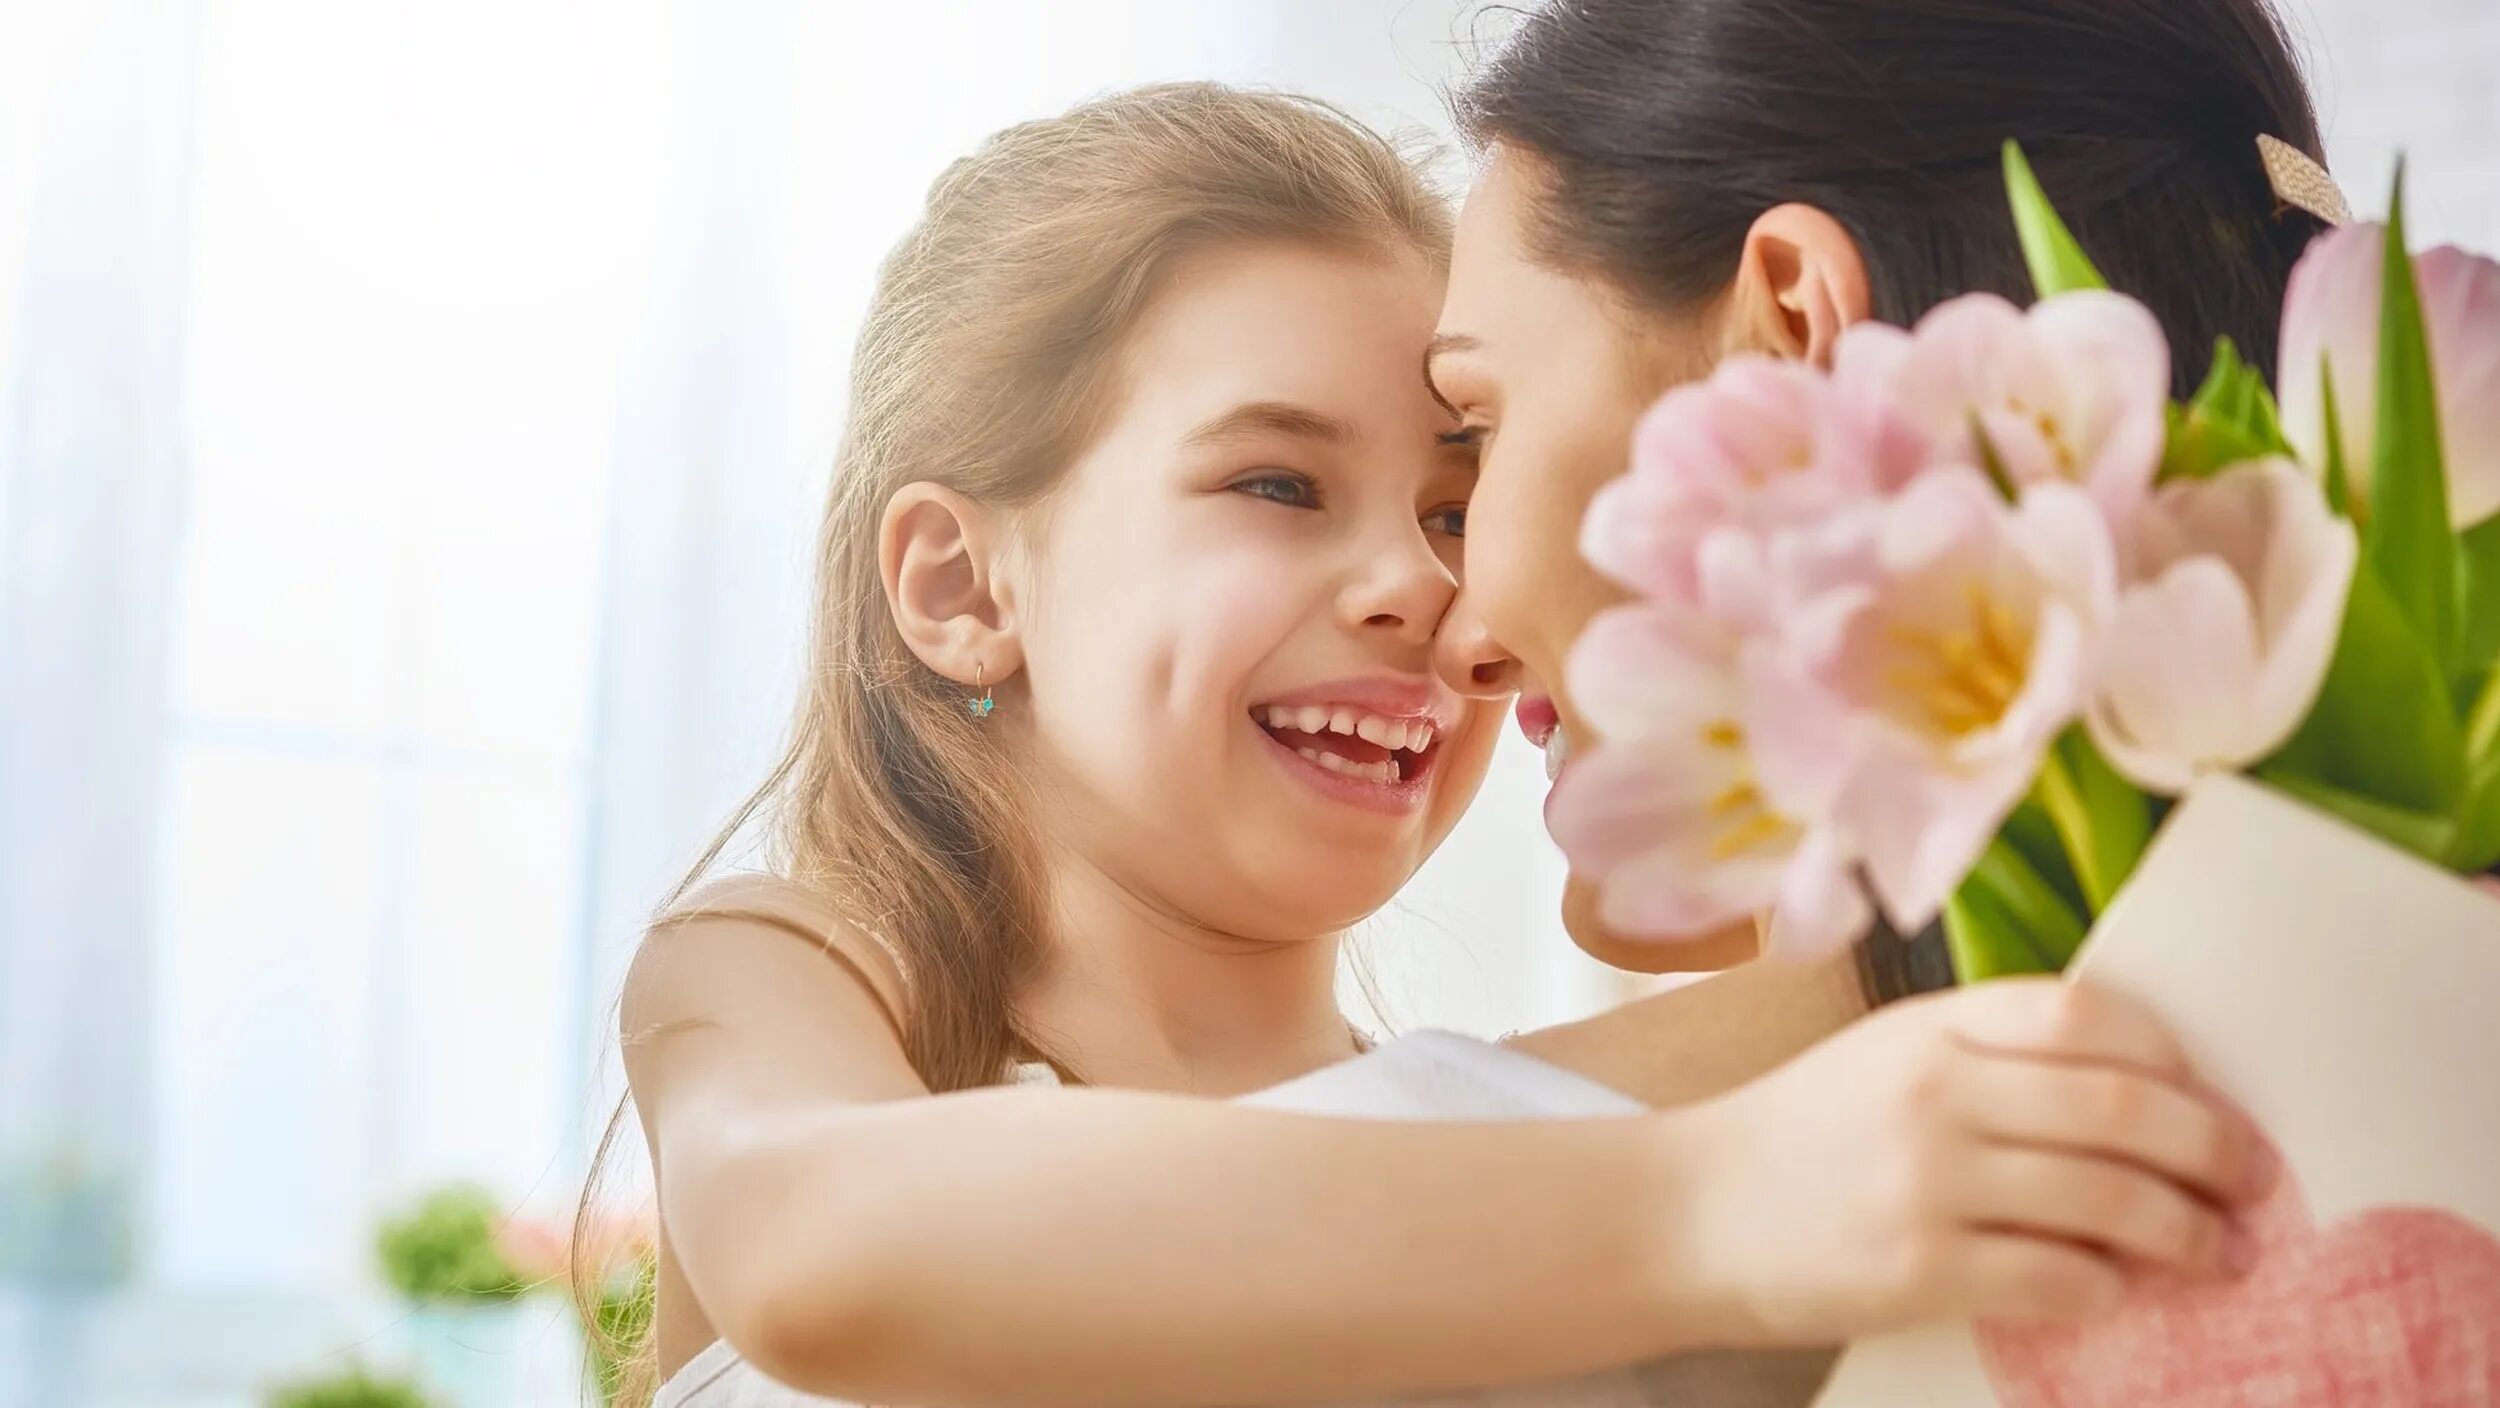 Ребенок дарит цветок маме. Ребенок дарит подарок маме. Дети поздравляют маму. Дети дарят цветы. Маме дарят цветы.